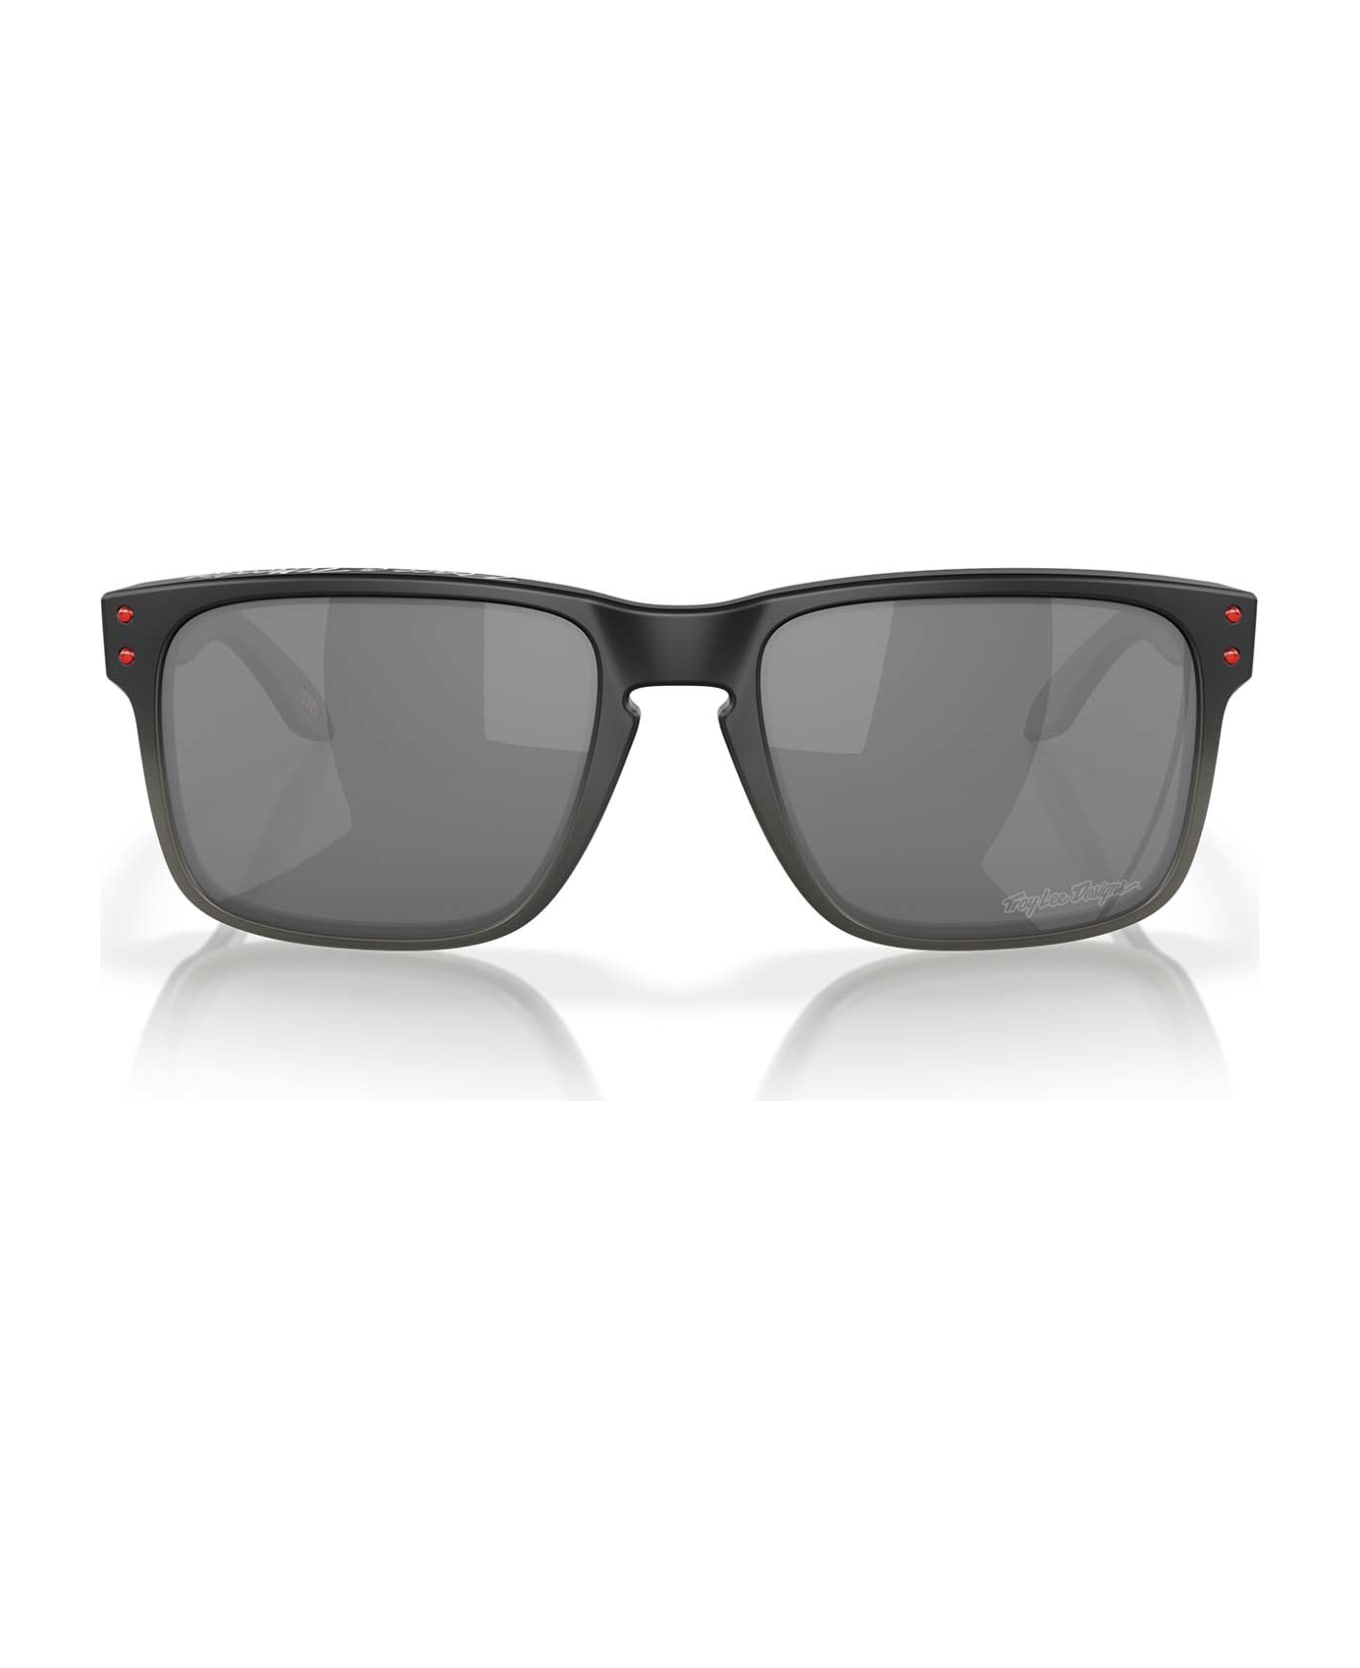 Oakley Oo9102 Troy Lee Designs Black Fade Sunglasses - Troy Lee Designs Black Fade